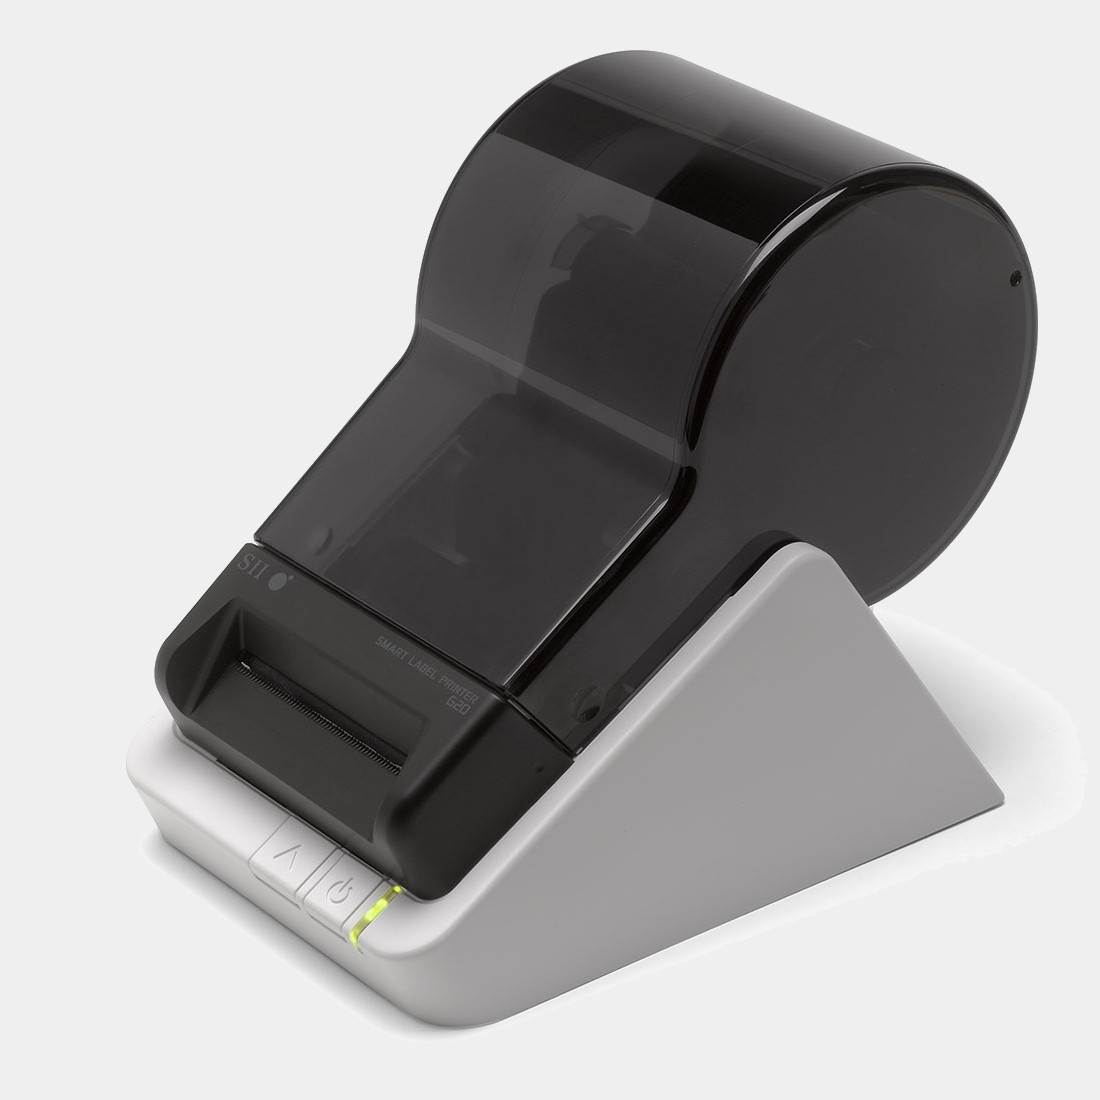 SEIKO Smart Label Printer SLP620-EU 203 dpi 203 dpi